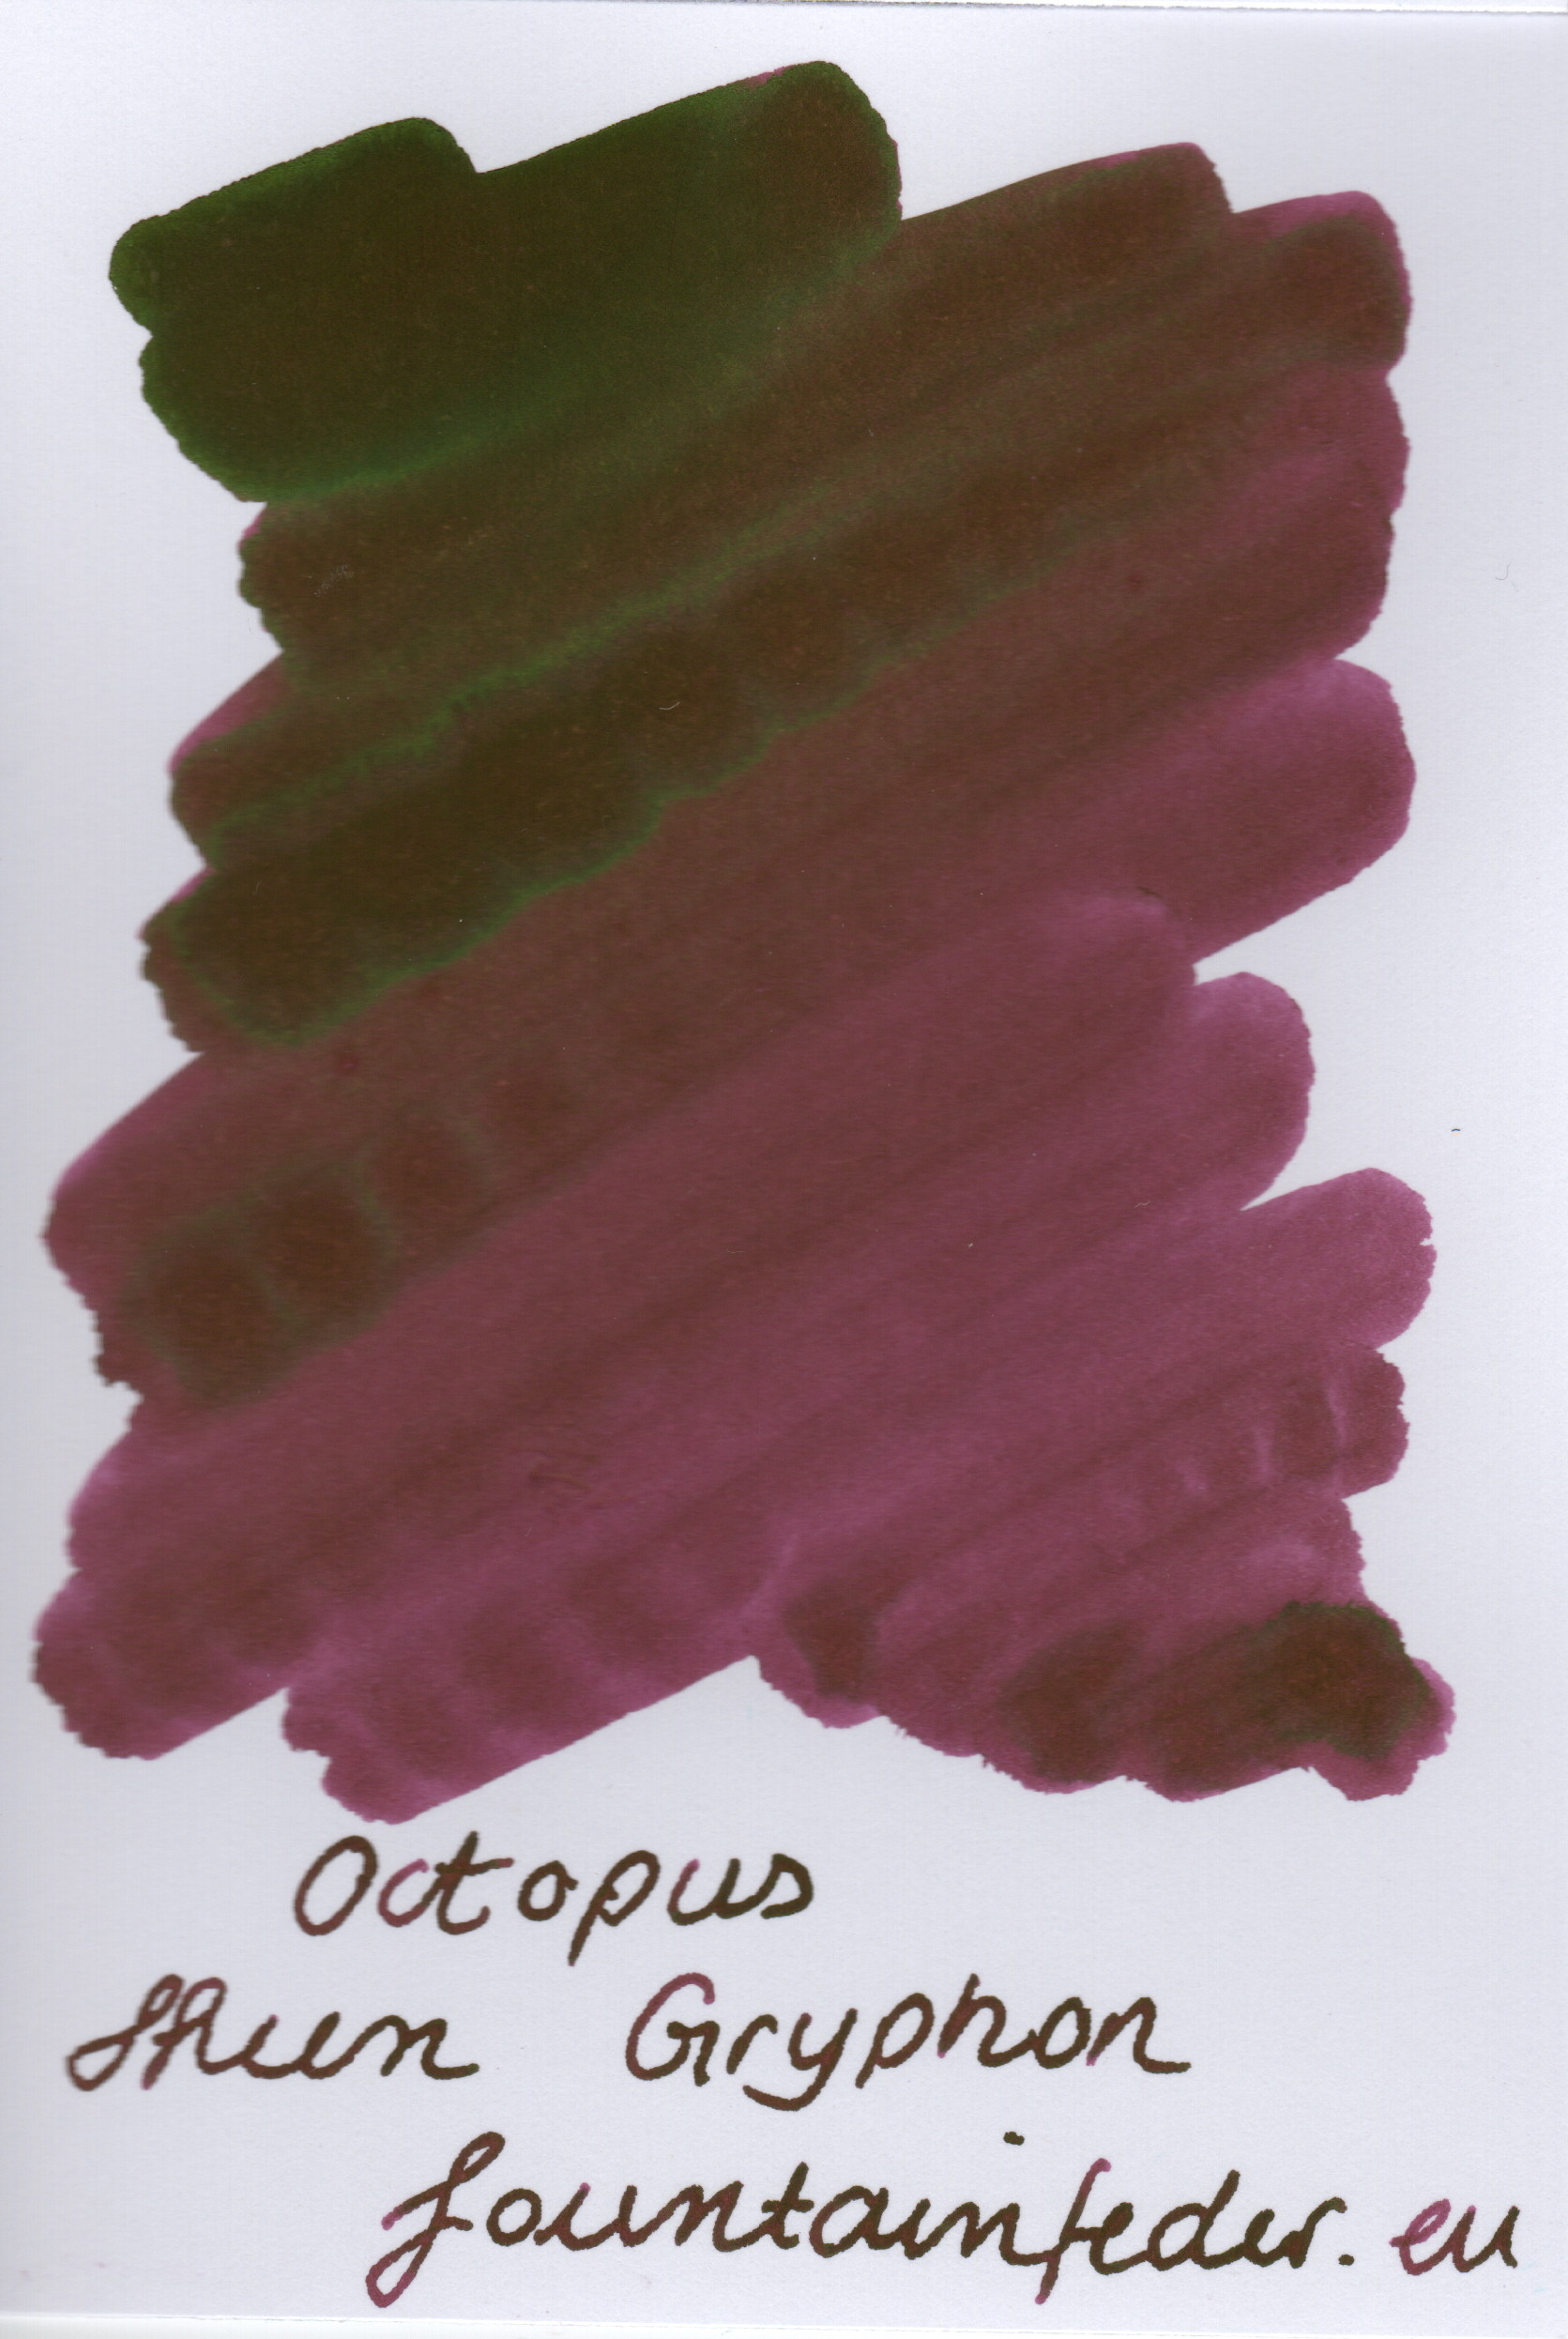 Octopus Sheen Gryphon Ink Sample 2ml 